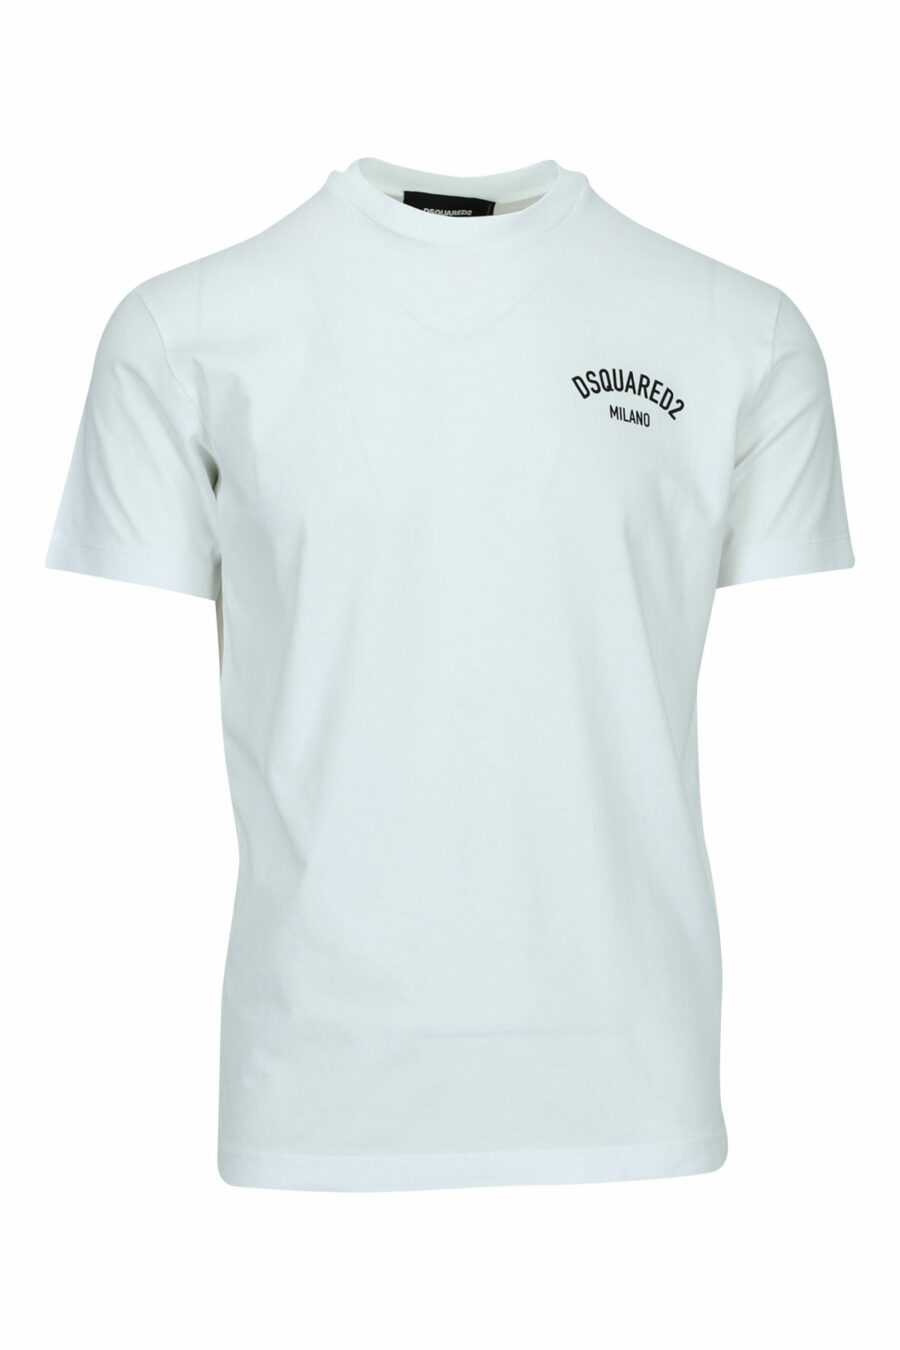 Camiseta blanca con logo doblado "milano" - 8054148570989 scaled